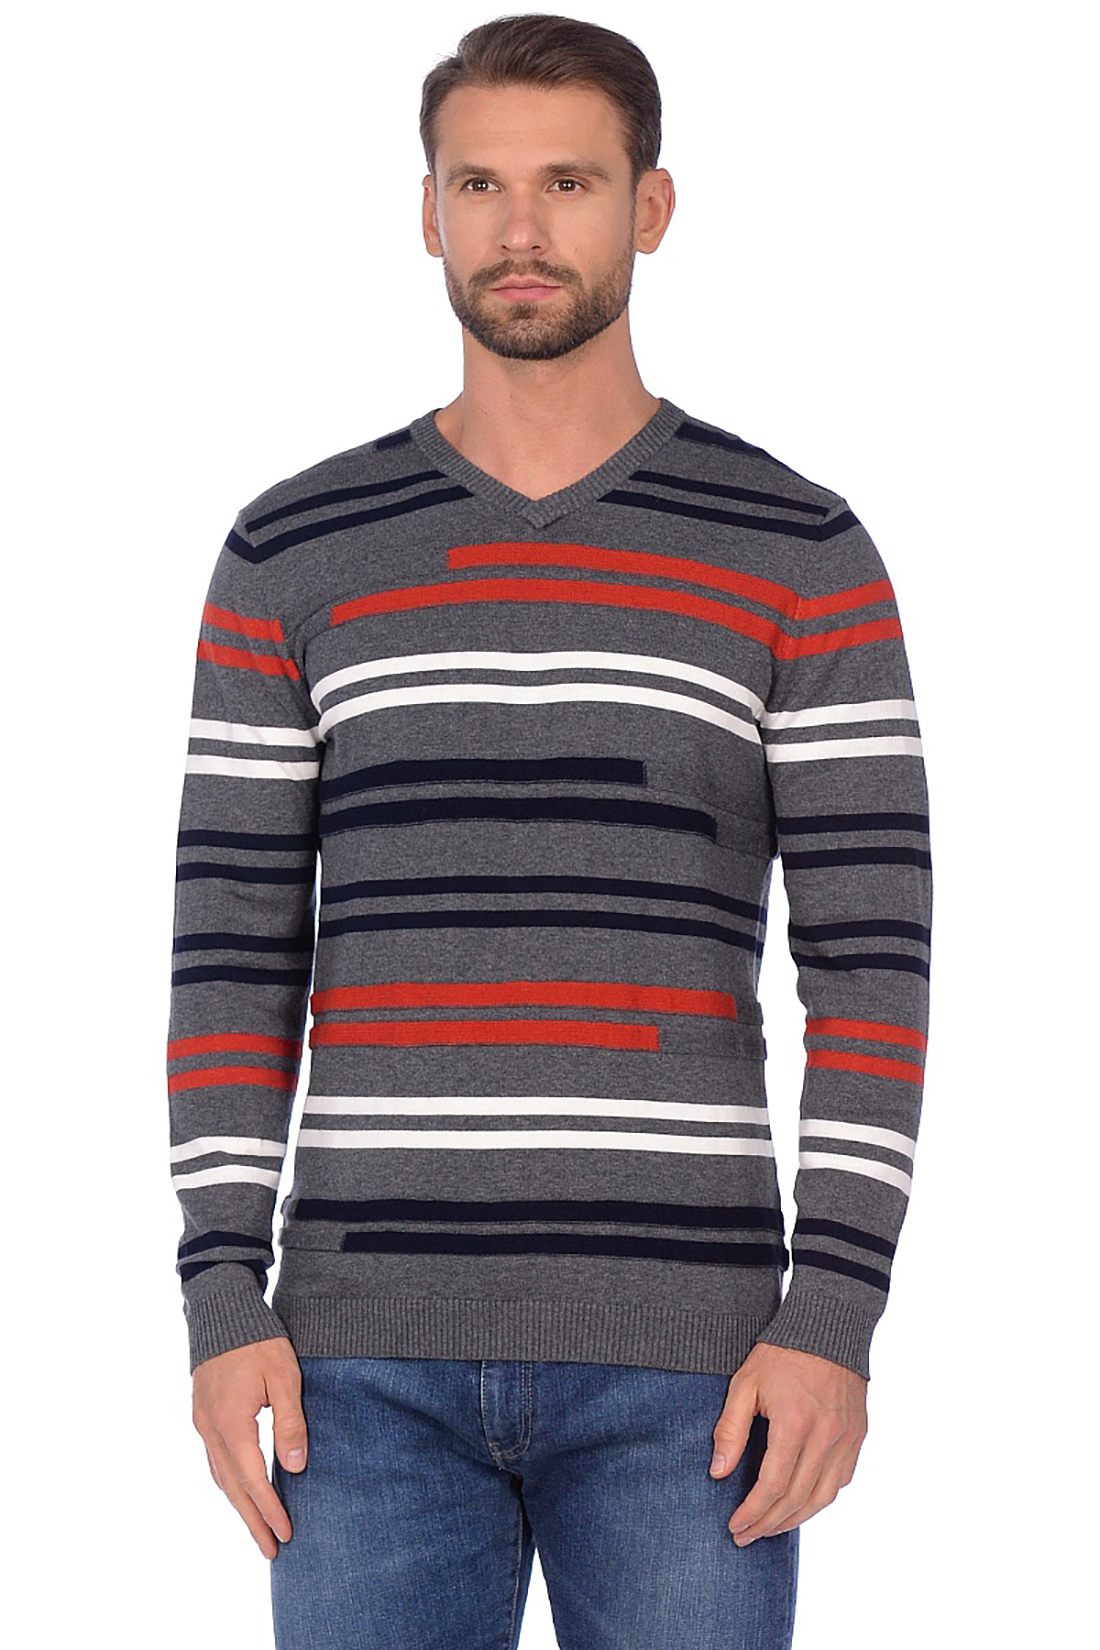 Пуловер с контрастными полосками (арт. baon B639530), размер XXL, цвет серый Пуловер с контрастными полосками (арт. baon B639530) - фото 1